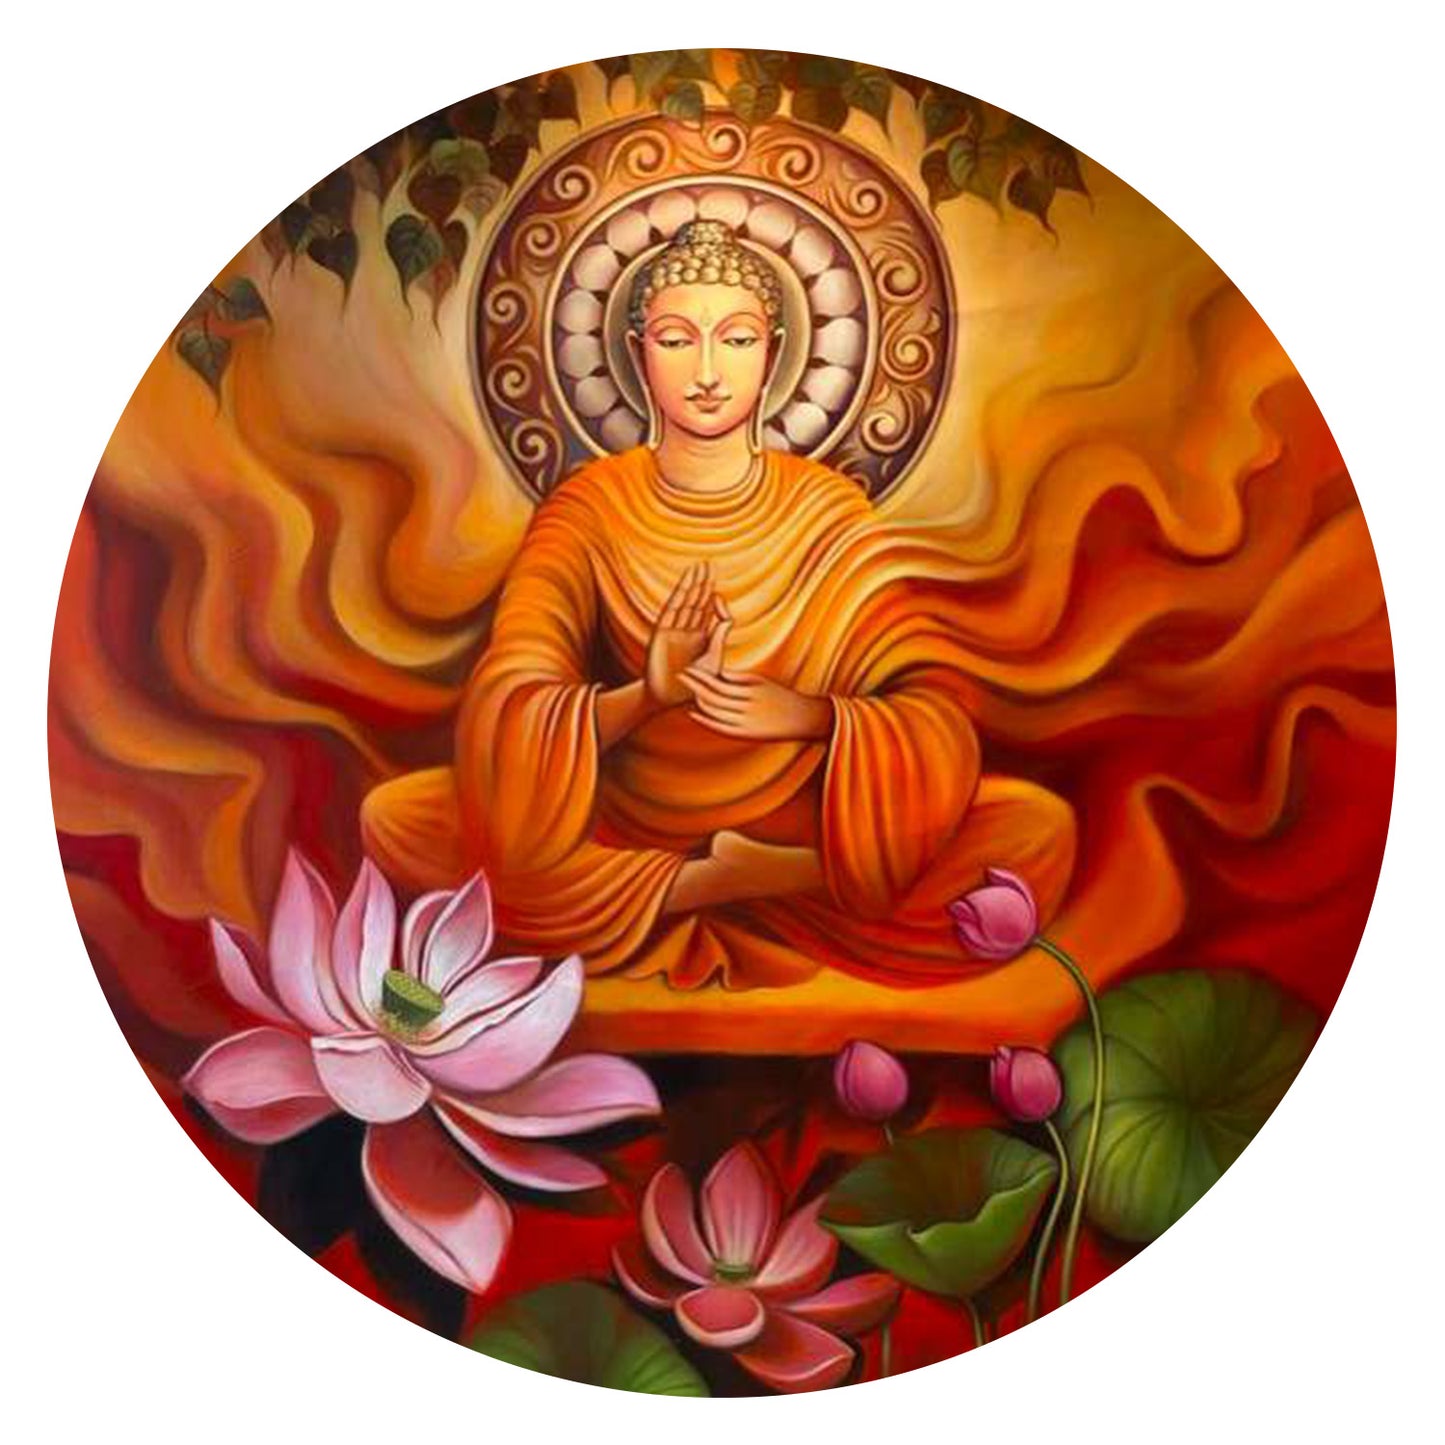 Buddha: A Sitting Buddha Embraced by Serene Warm Tones